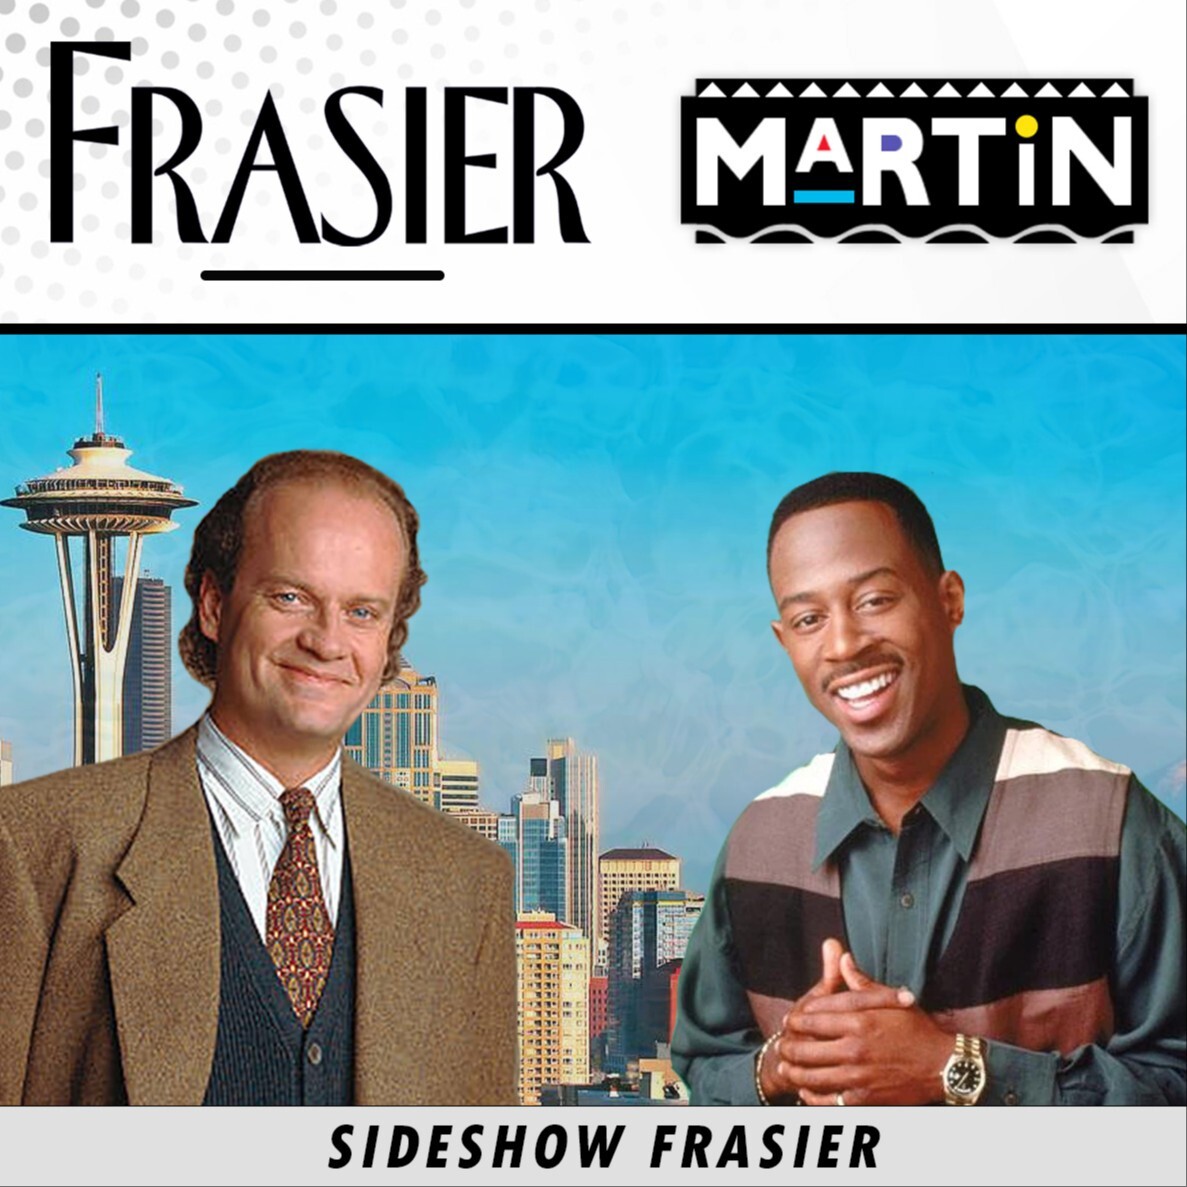 Frasier - Author, Author | Martin - The Hoedown in Motown